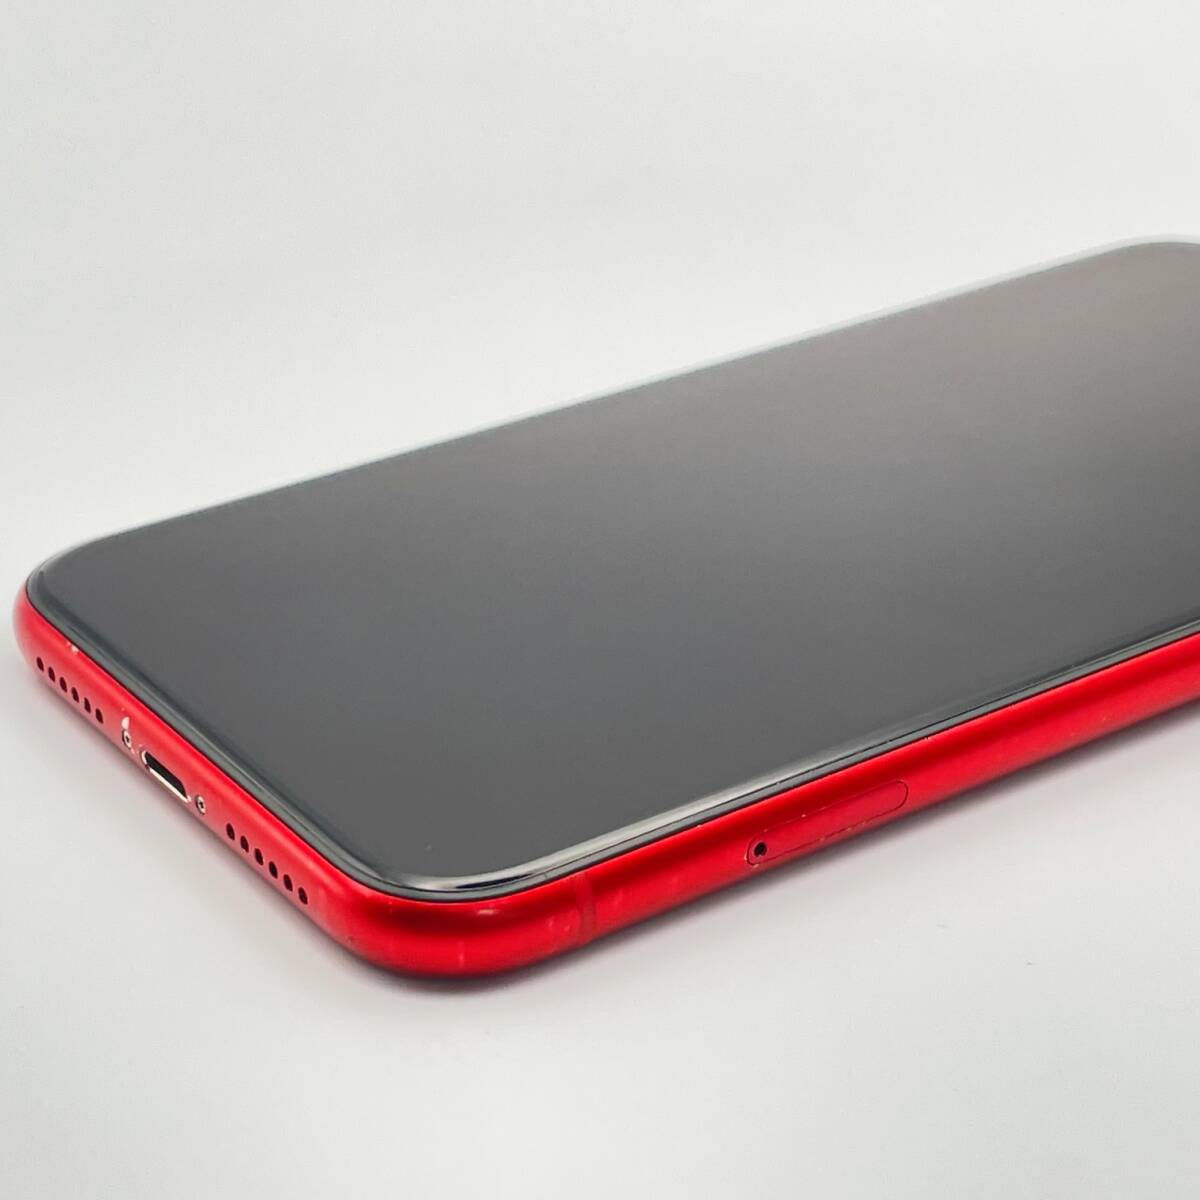  б/у товар Apple Apple iPhone 11 64GB (PRODUCT) RED SIM разблокирован .SIM свободный б/у товар 1 иен из распродажа 